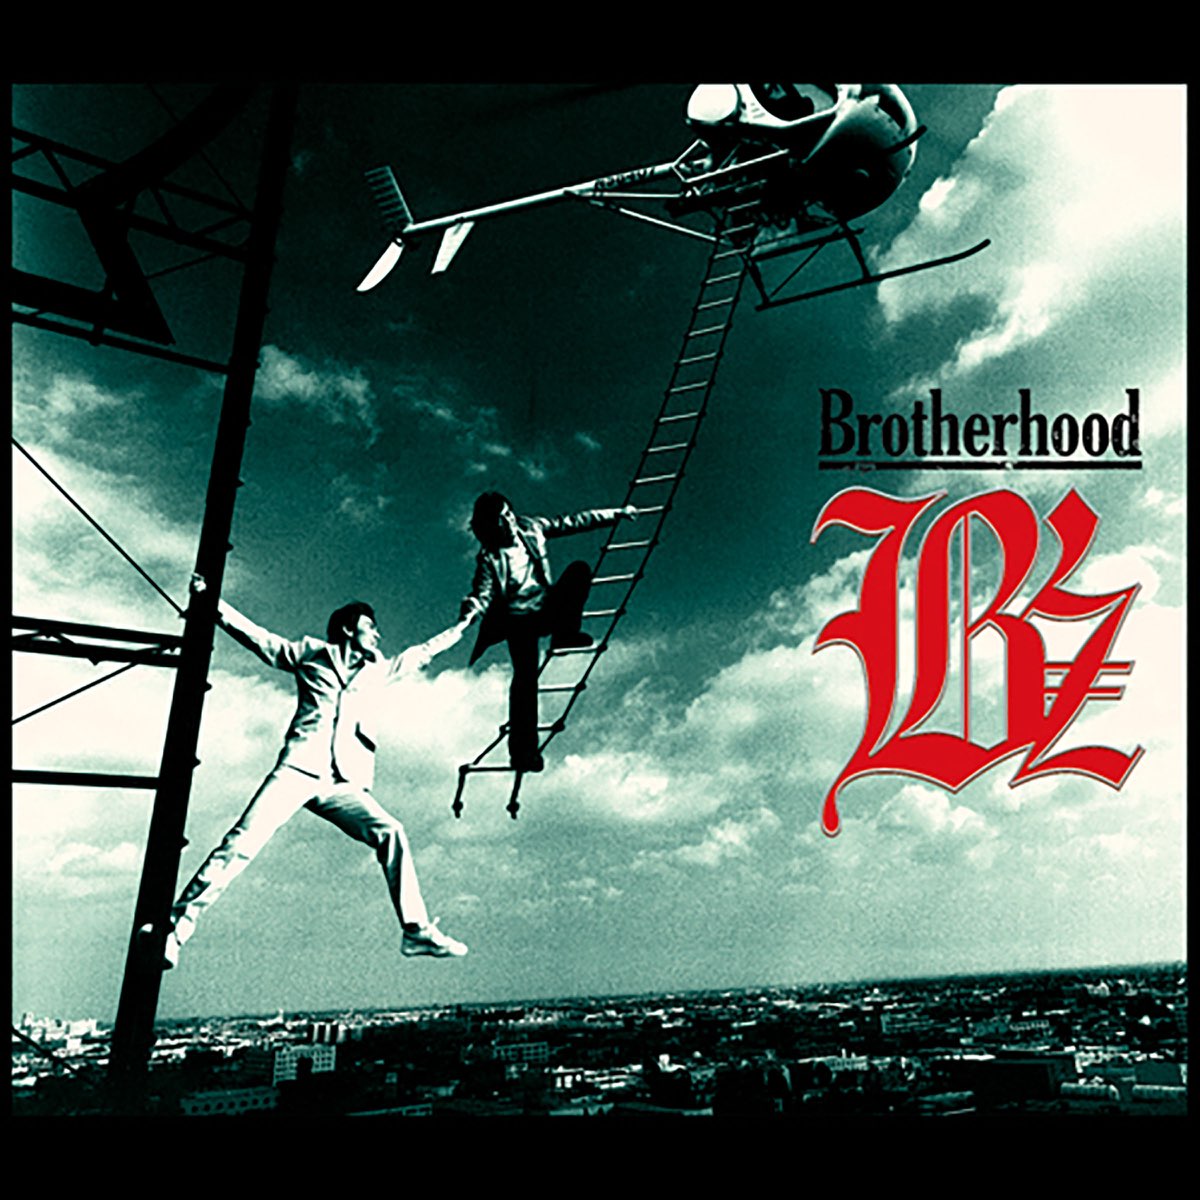 Brotherhood - Album by B'z - Apple Music